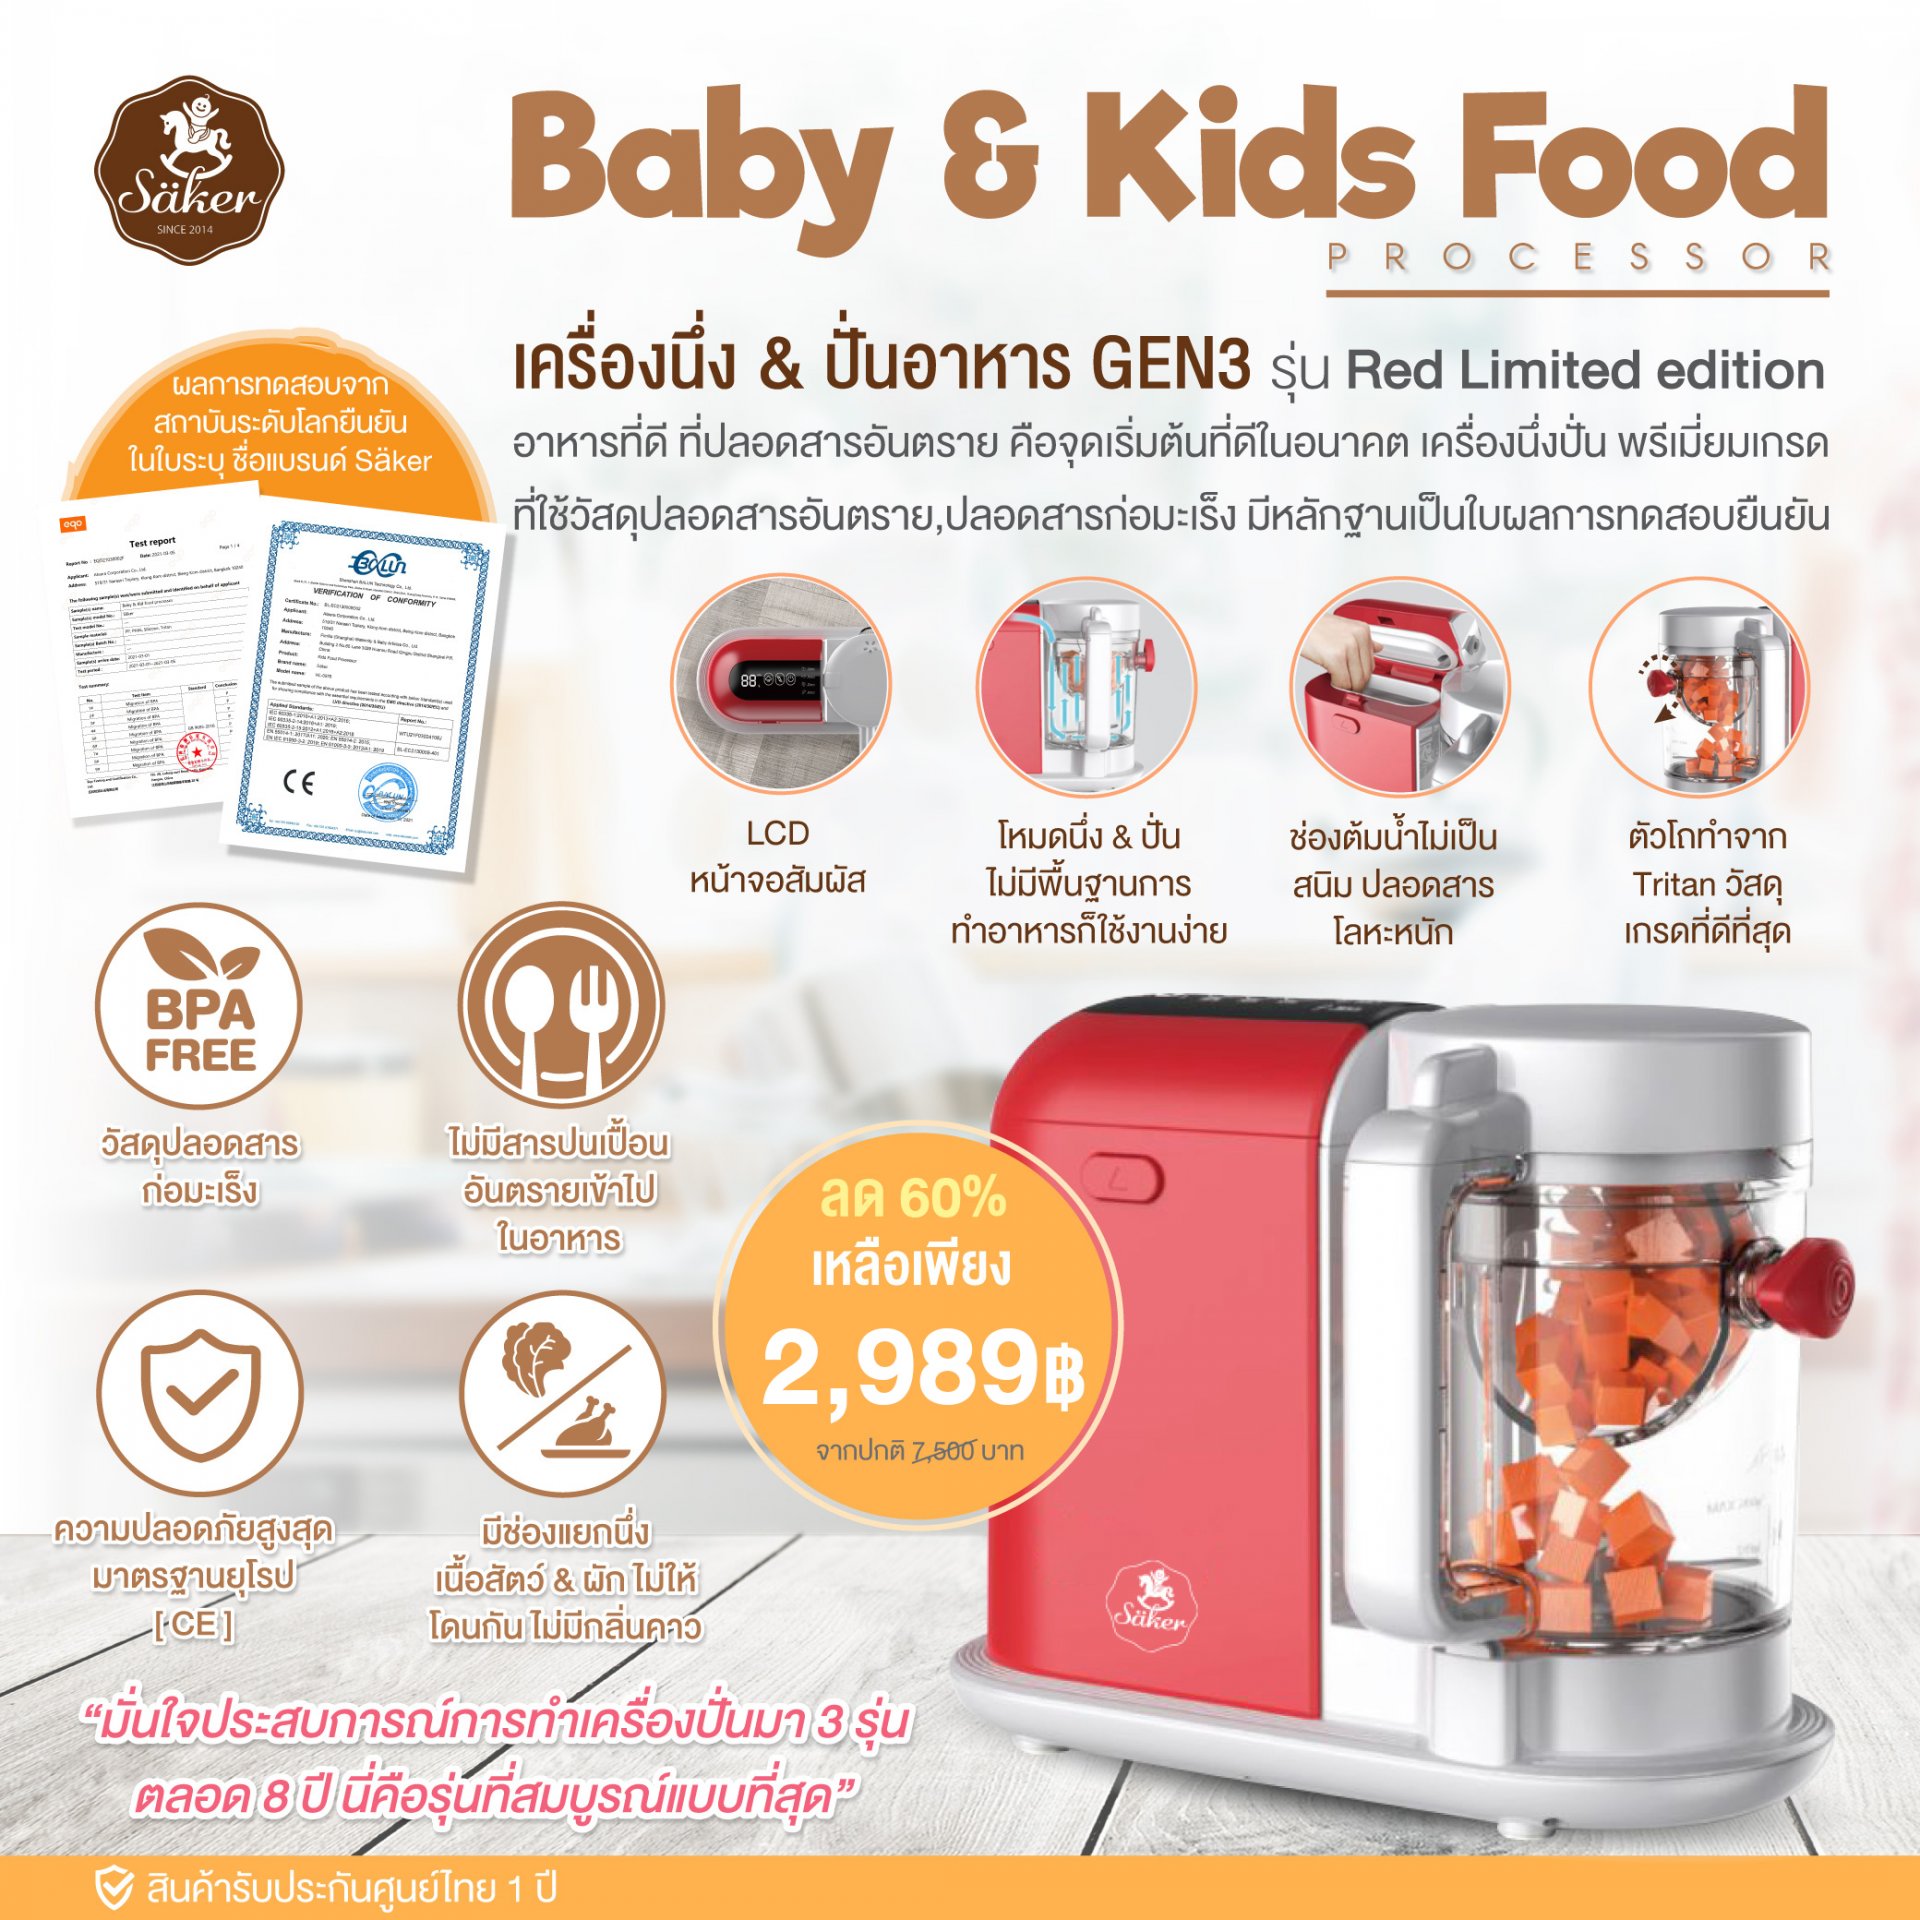 Säker Baby & Kids Food  Processor เครื่องนึ่ง+ปั่นอาหาร (Gen3)  ปกติราคา 7,500 บ. ลดเหลือ 2,989 มีค่าจัดส่งเพิ่มเติม 100 บาท ซึ่งรวมกับราคาด้านล่างเรียบร้อย**